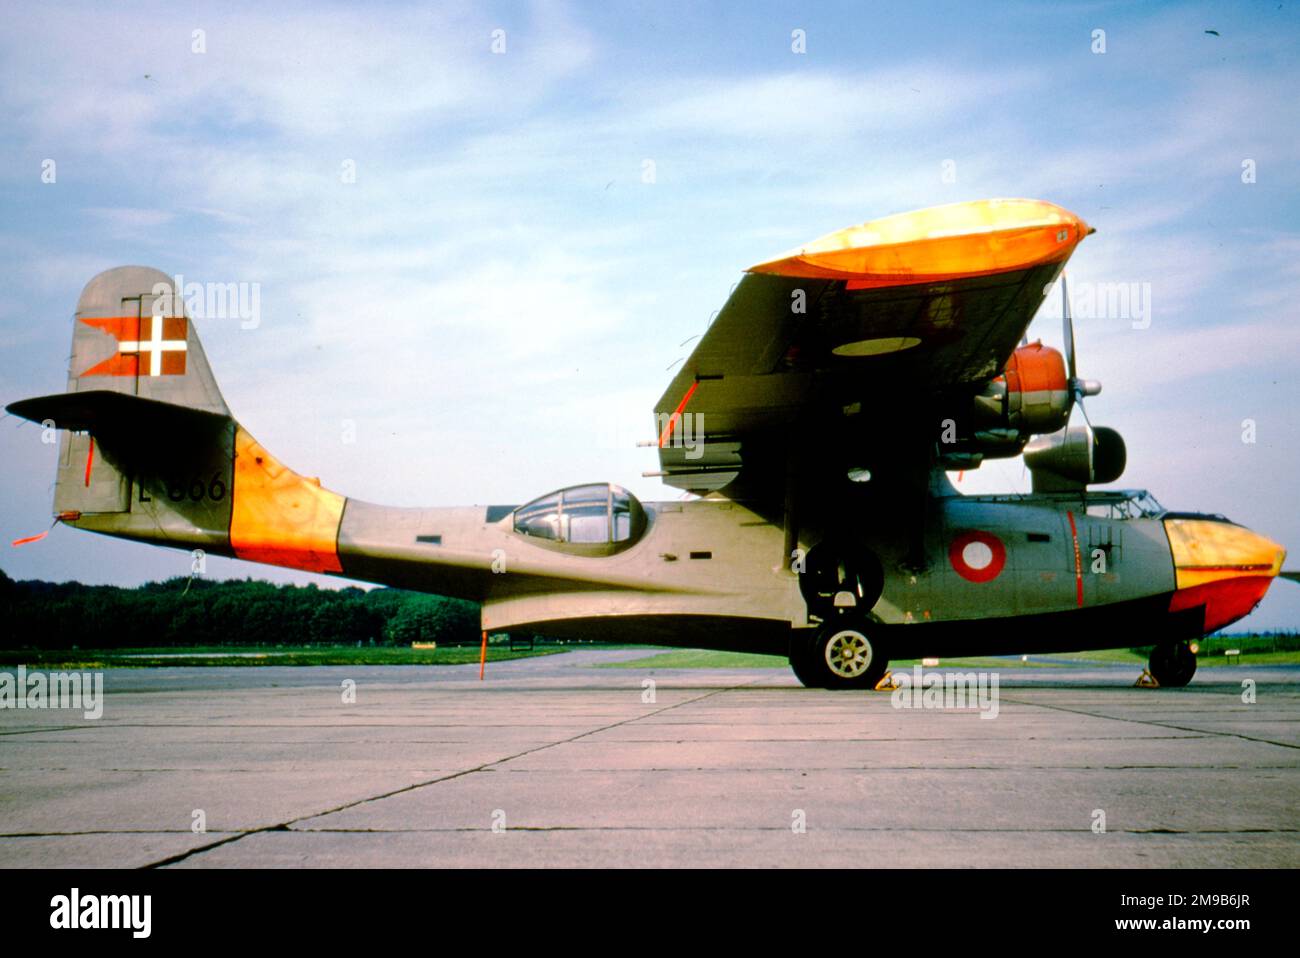 Flyvevabnet - Canadian Vickers OA-10A Catalina L-866 (msn CV402, ex 44-33915), in RAF Cosford nach Lieferung an das RAF Museum ca. Oktober 1973. (Flyvevabnet - Royal Danish Air Force). Stockfoto